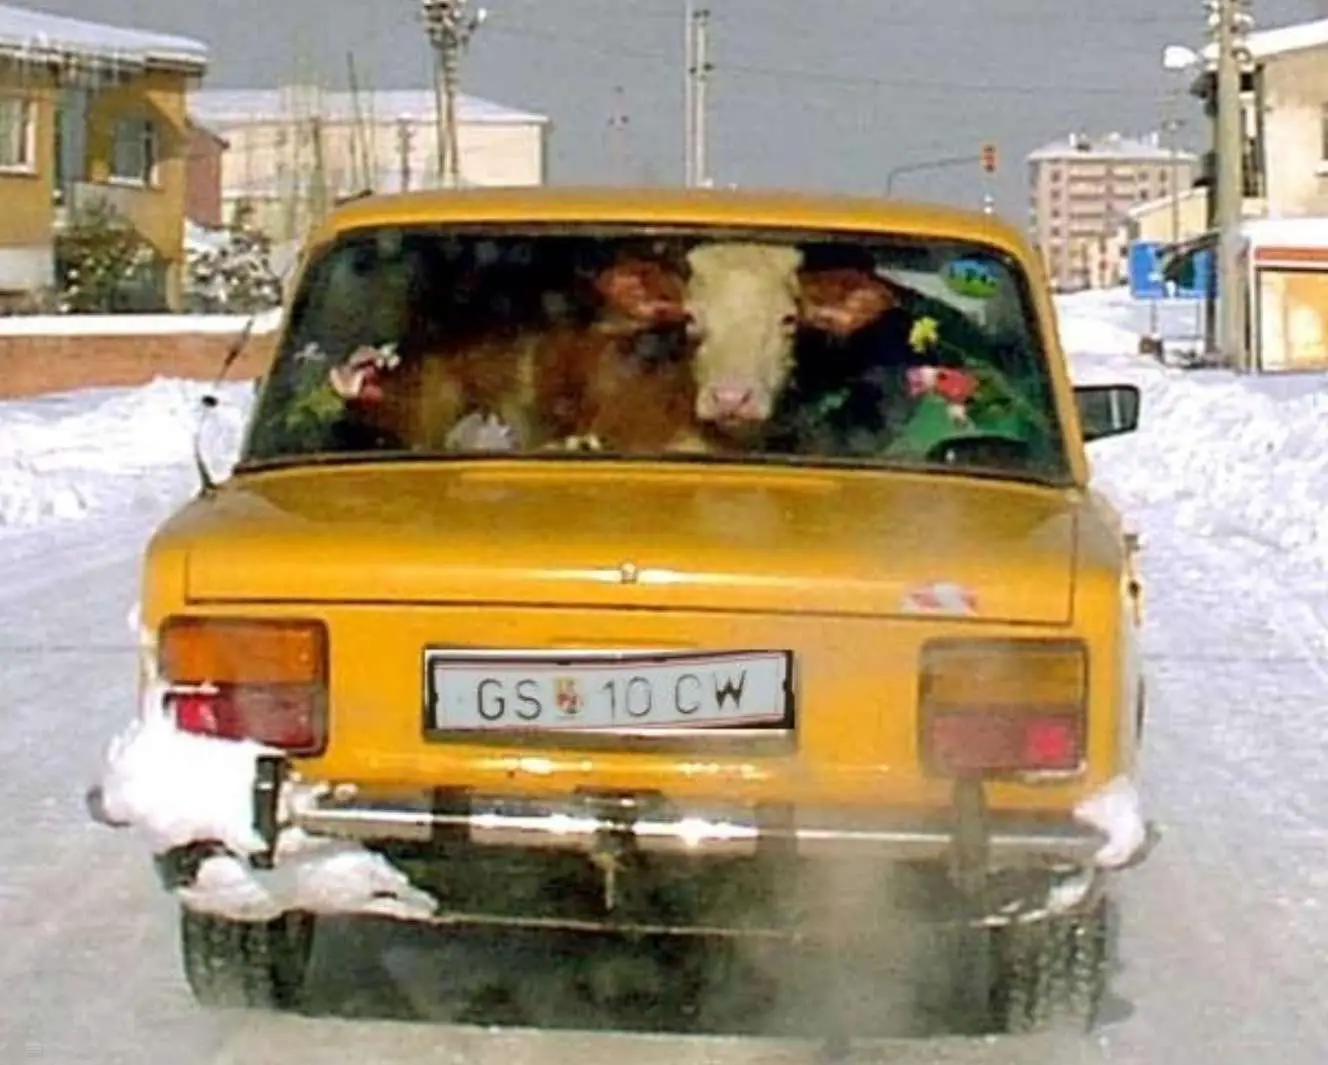 Bovine Transport - Cow Inside Car